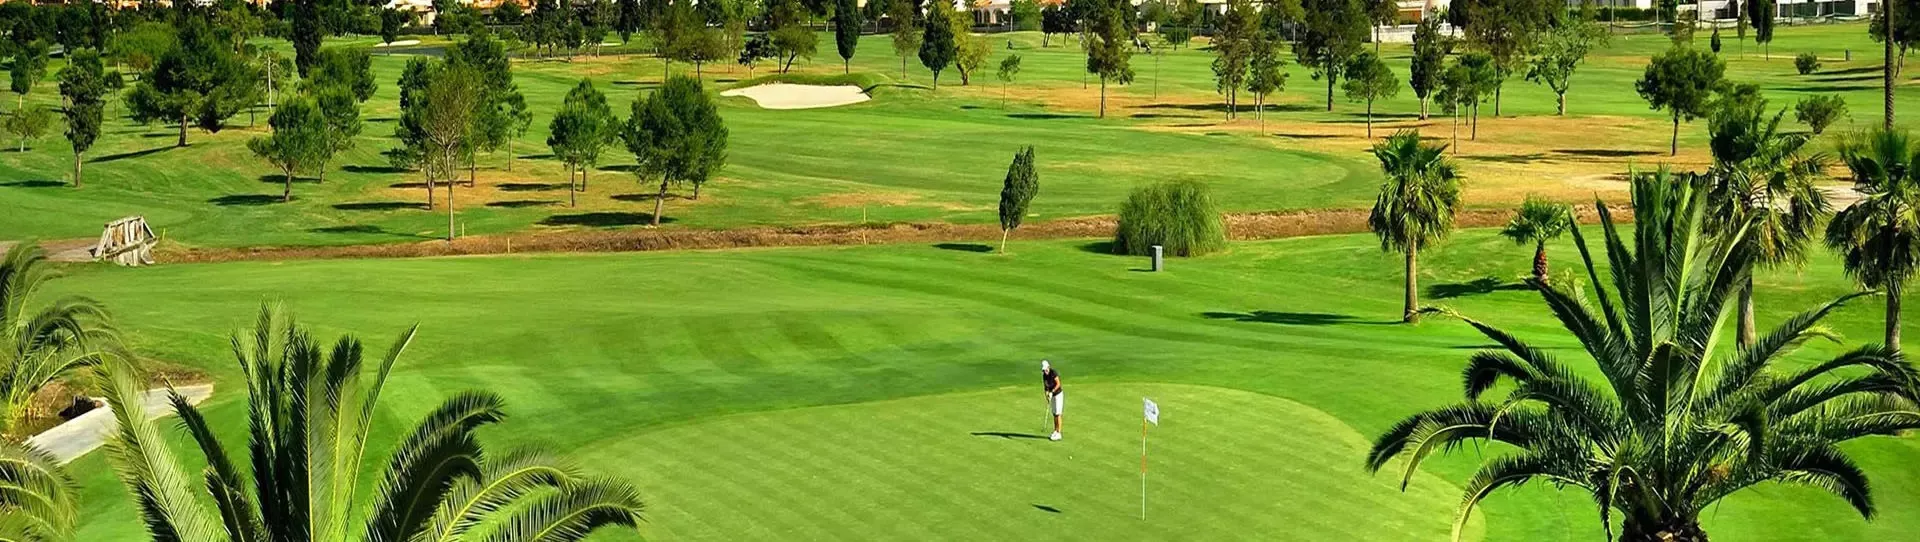 Spain golf courses - Oliva Nova Golf Course - Photo 2